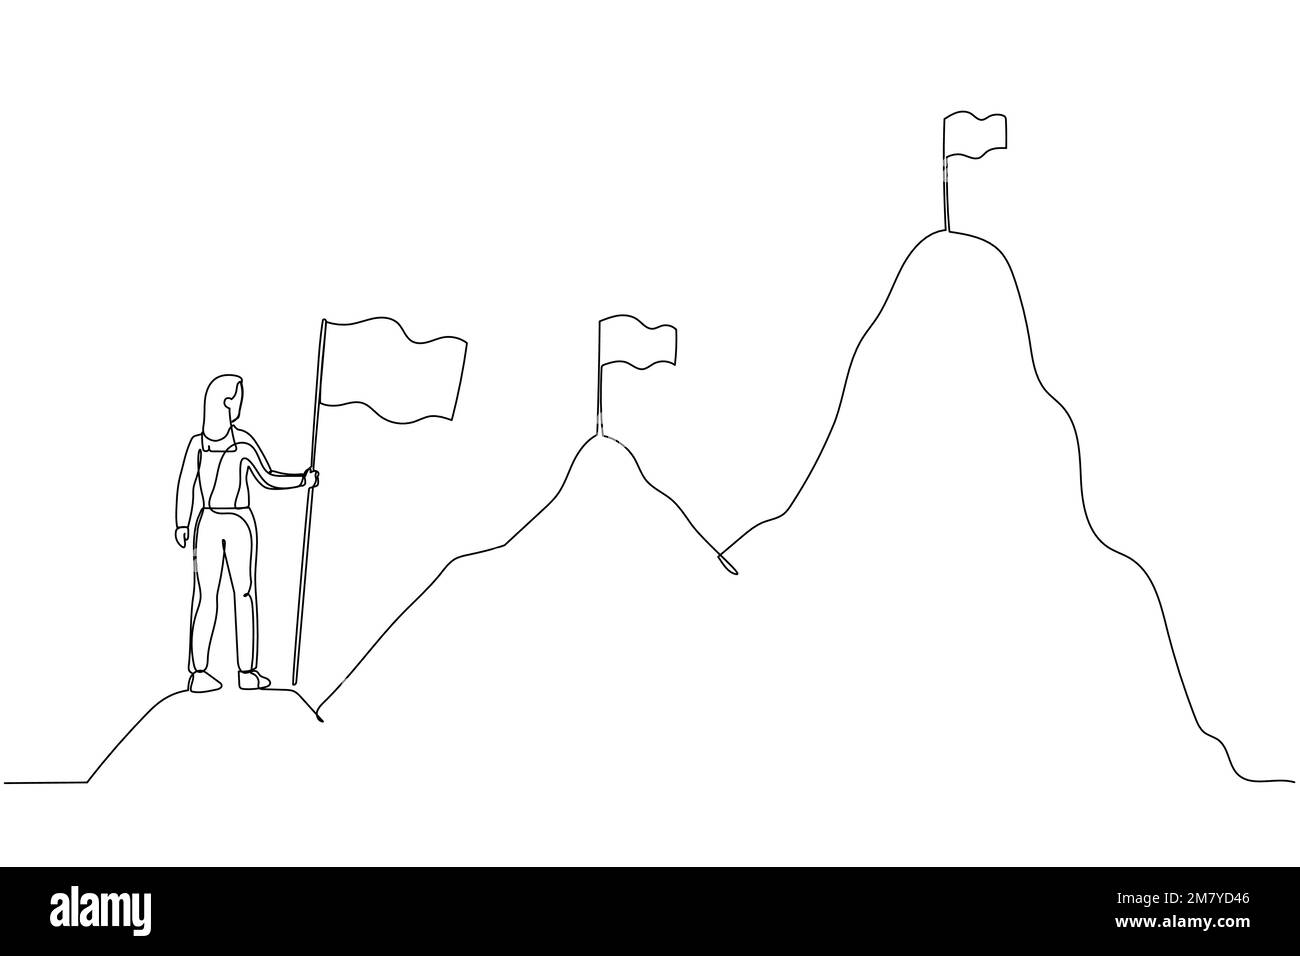 Cartoon of businesswoman climbing up mountains concept of business development. One line art style design Stock Vector